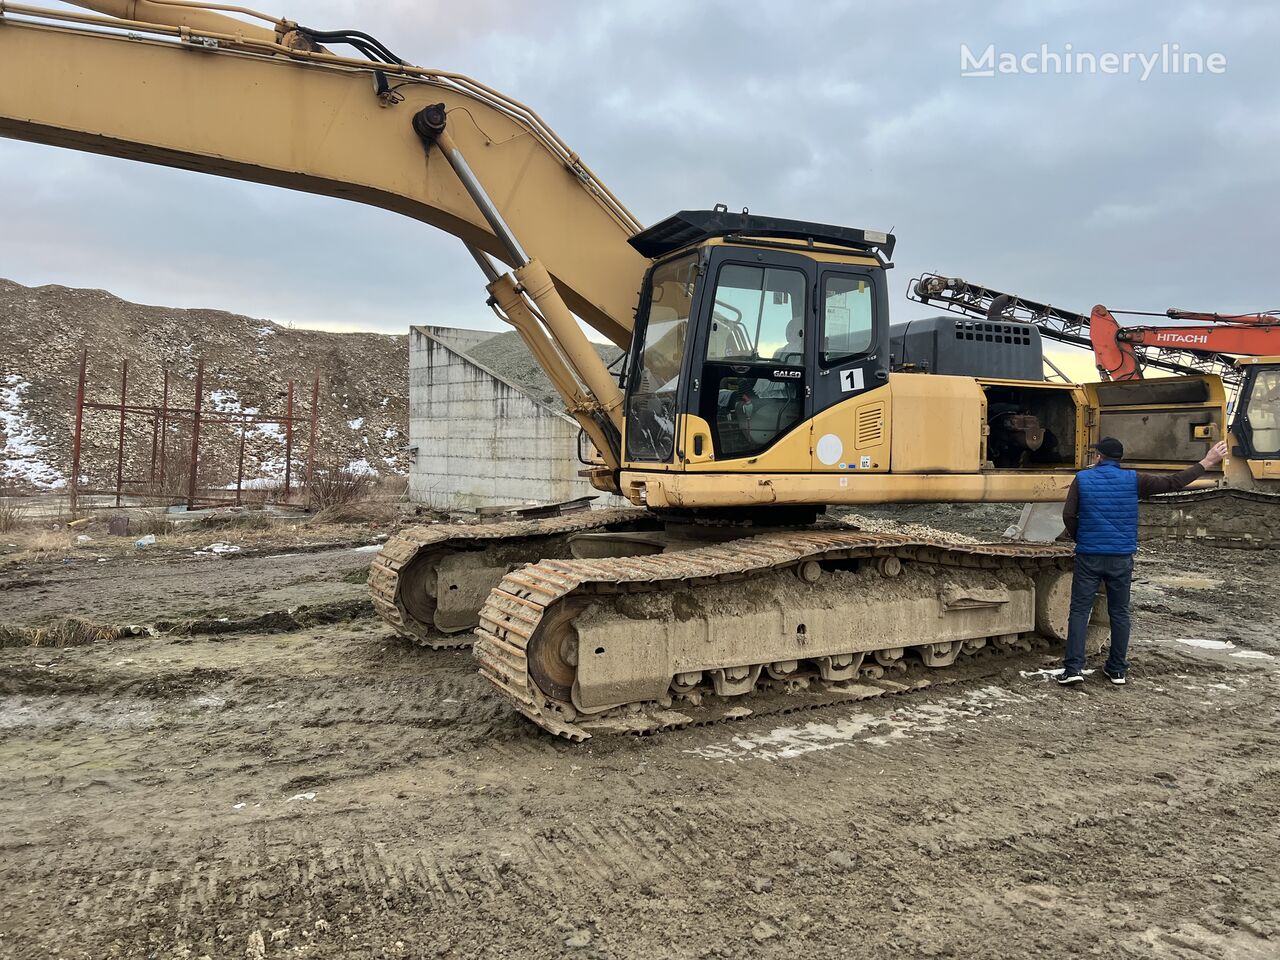 Komatsu PC450-7 tracked excavator